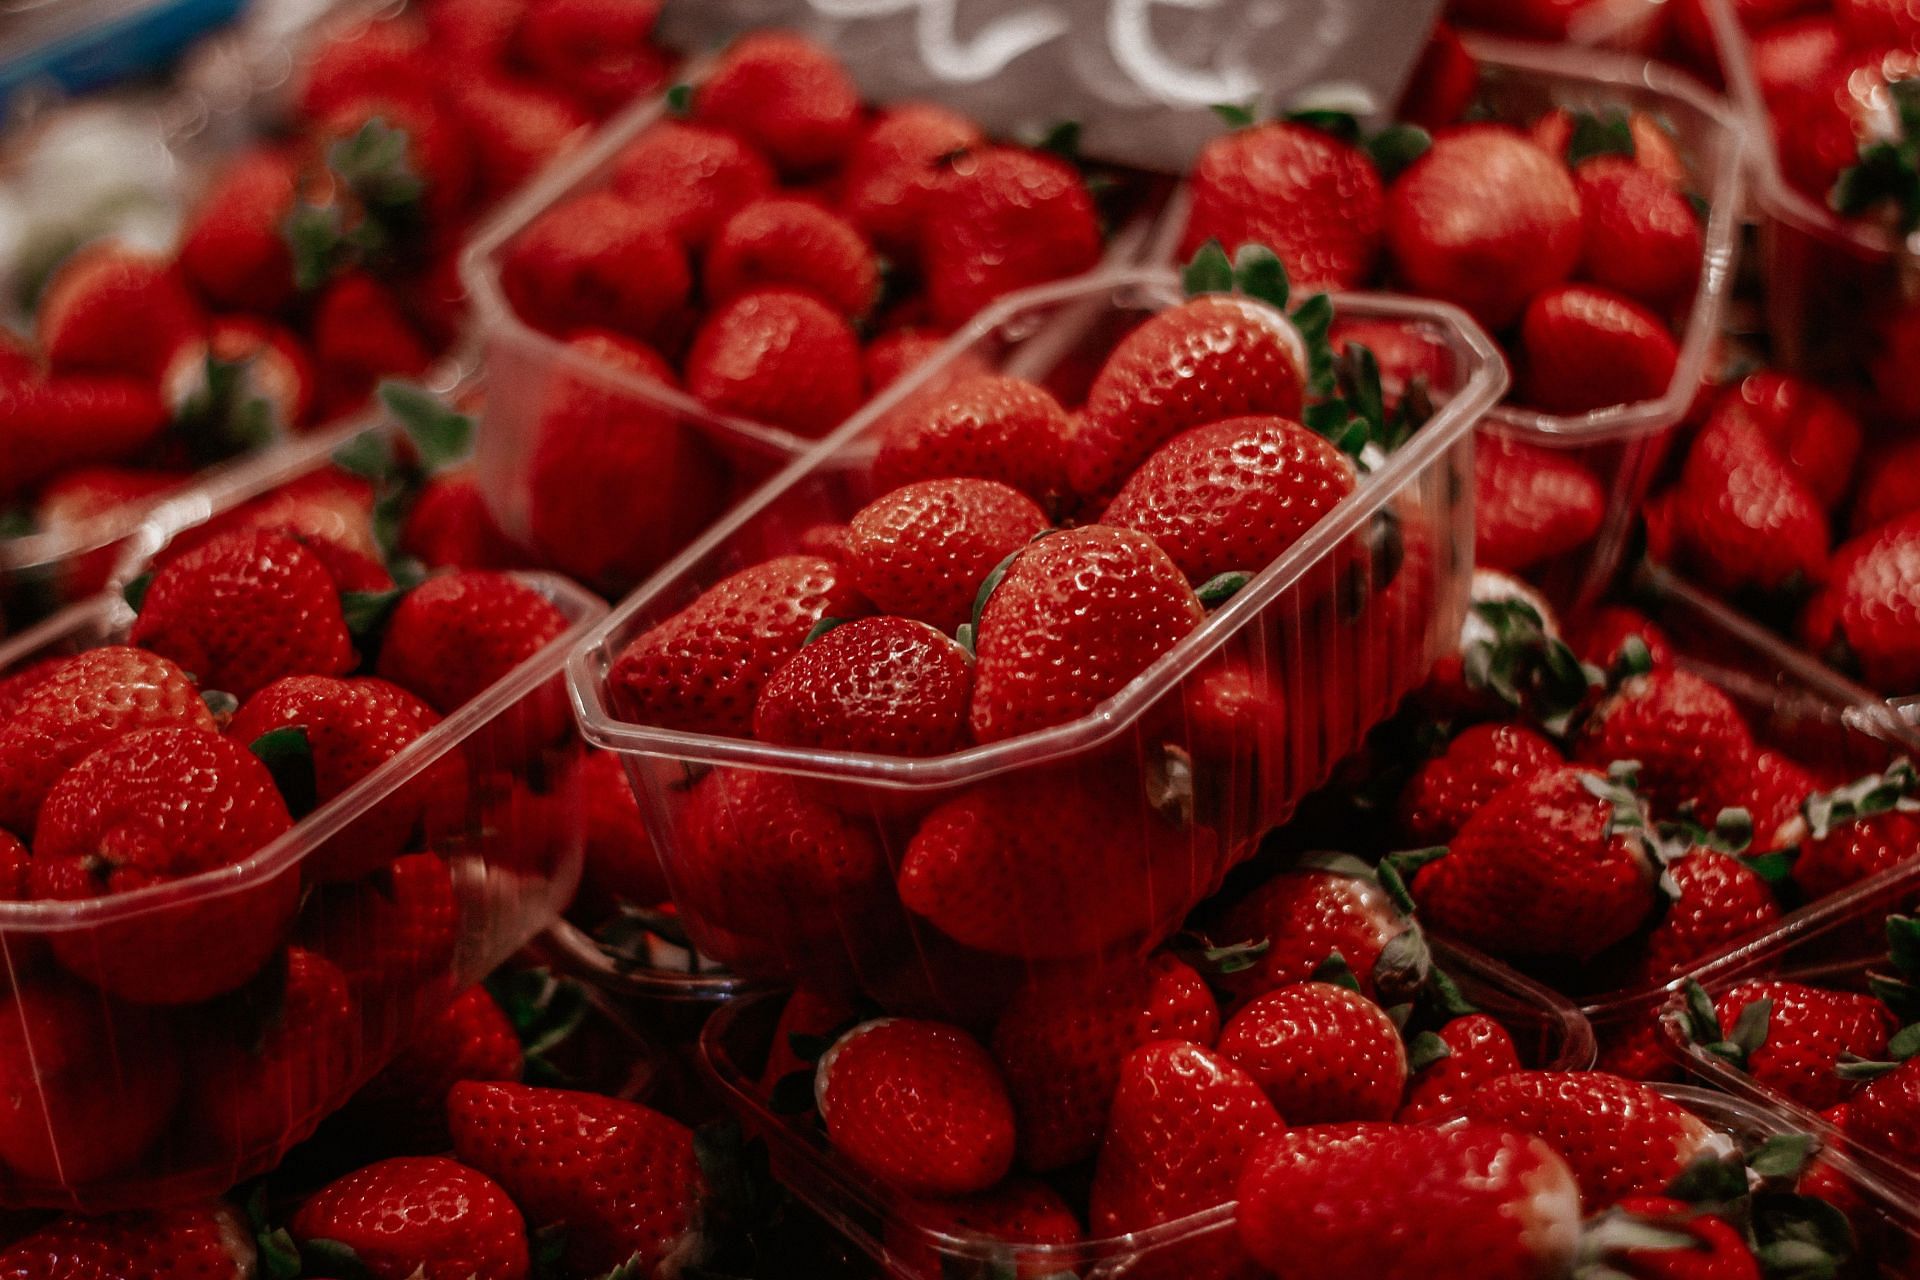 Berries help lower your blood pressure. (Image via Pexels / Anastasiia Petrova)